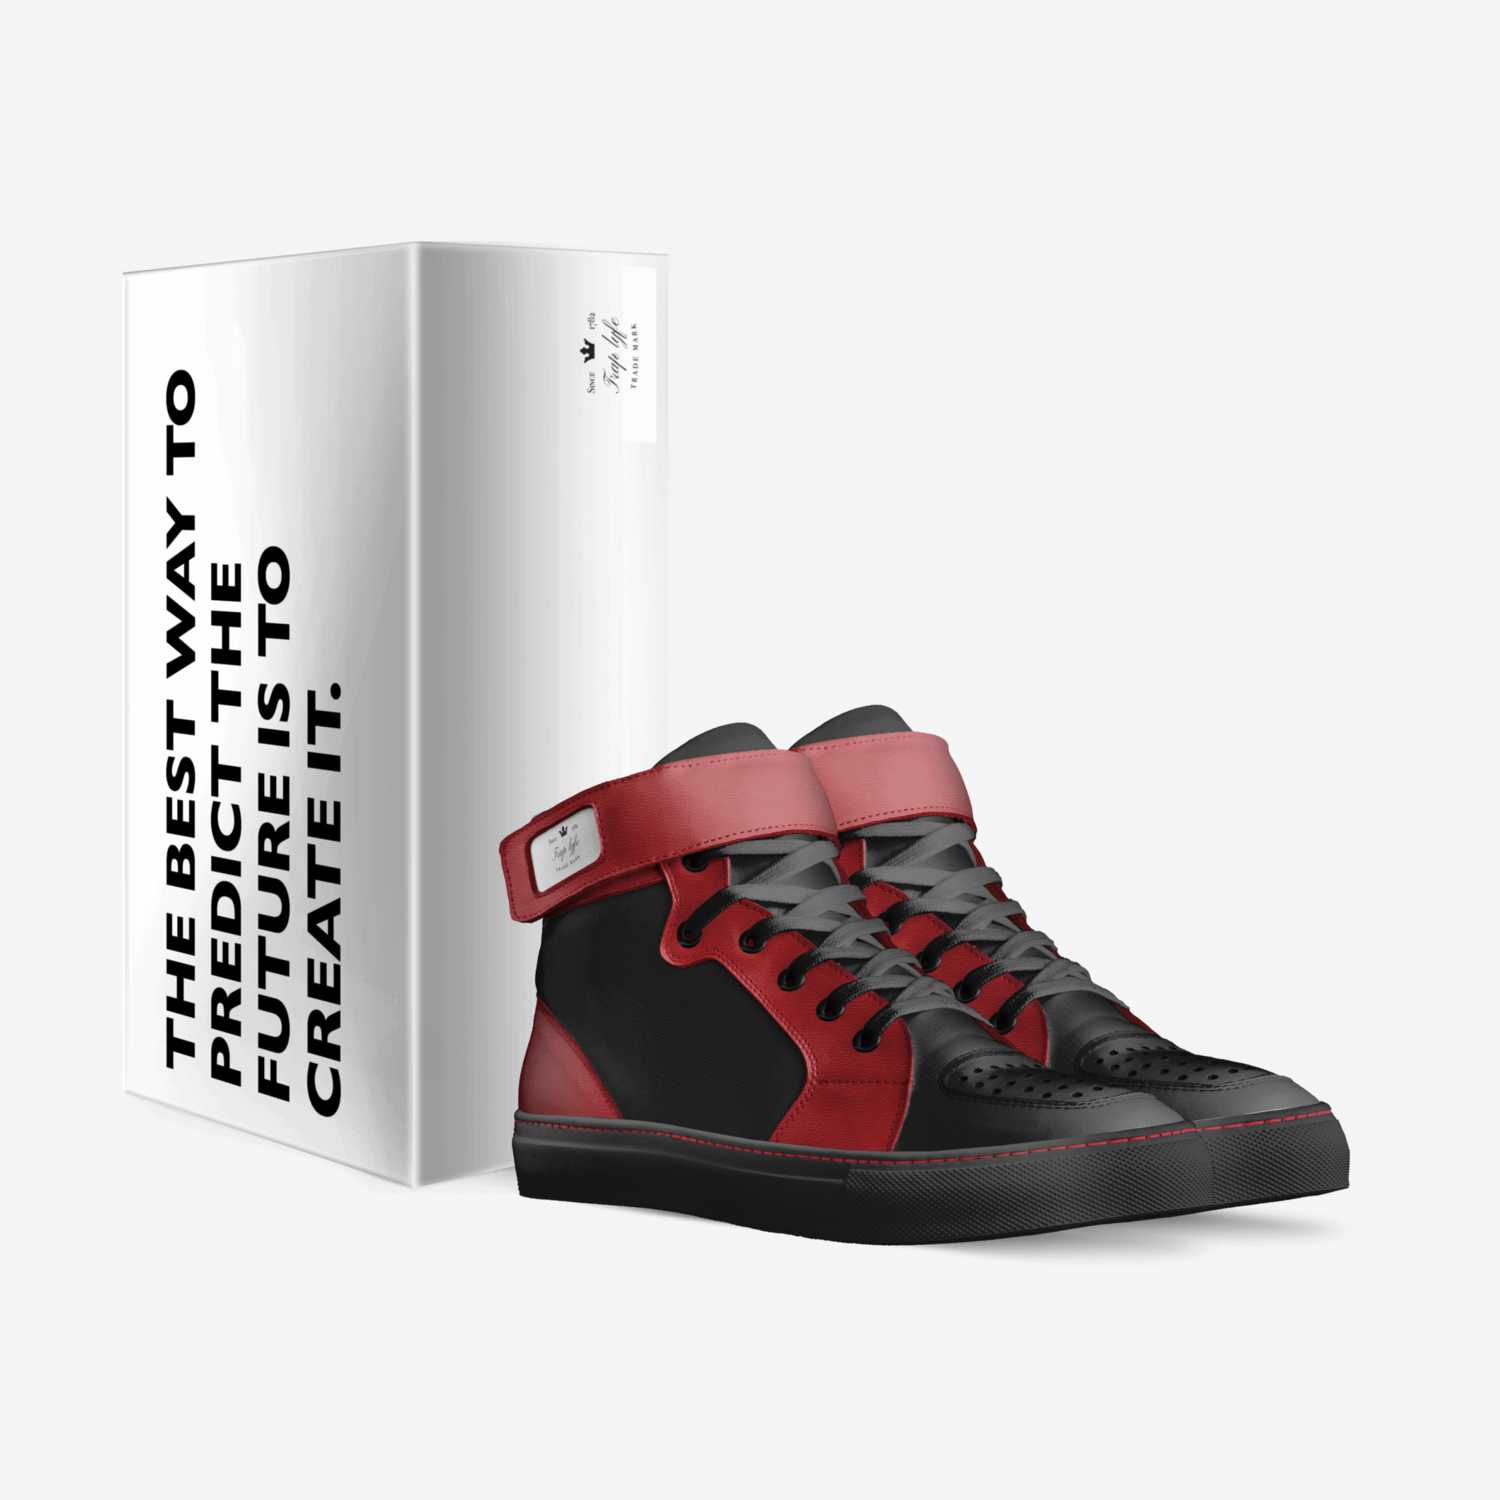 Trap lyfe custom made in Italy shoes by Dakota Jeror | Box view